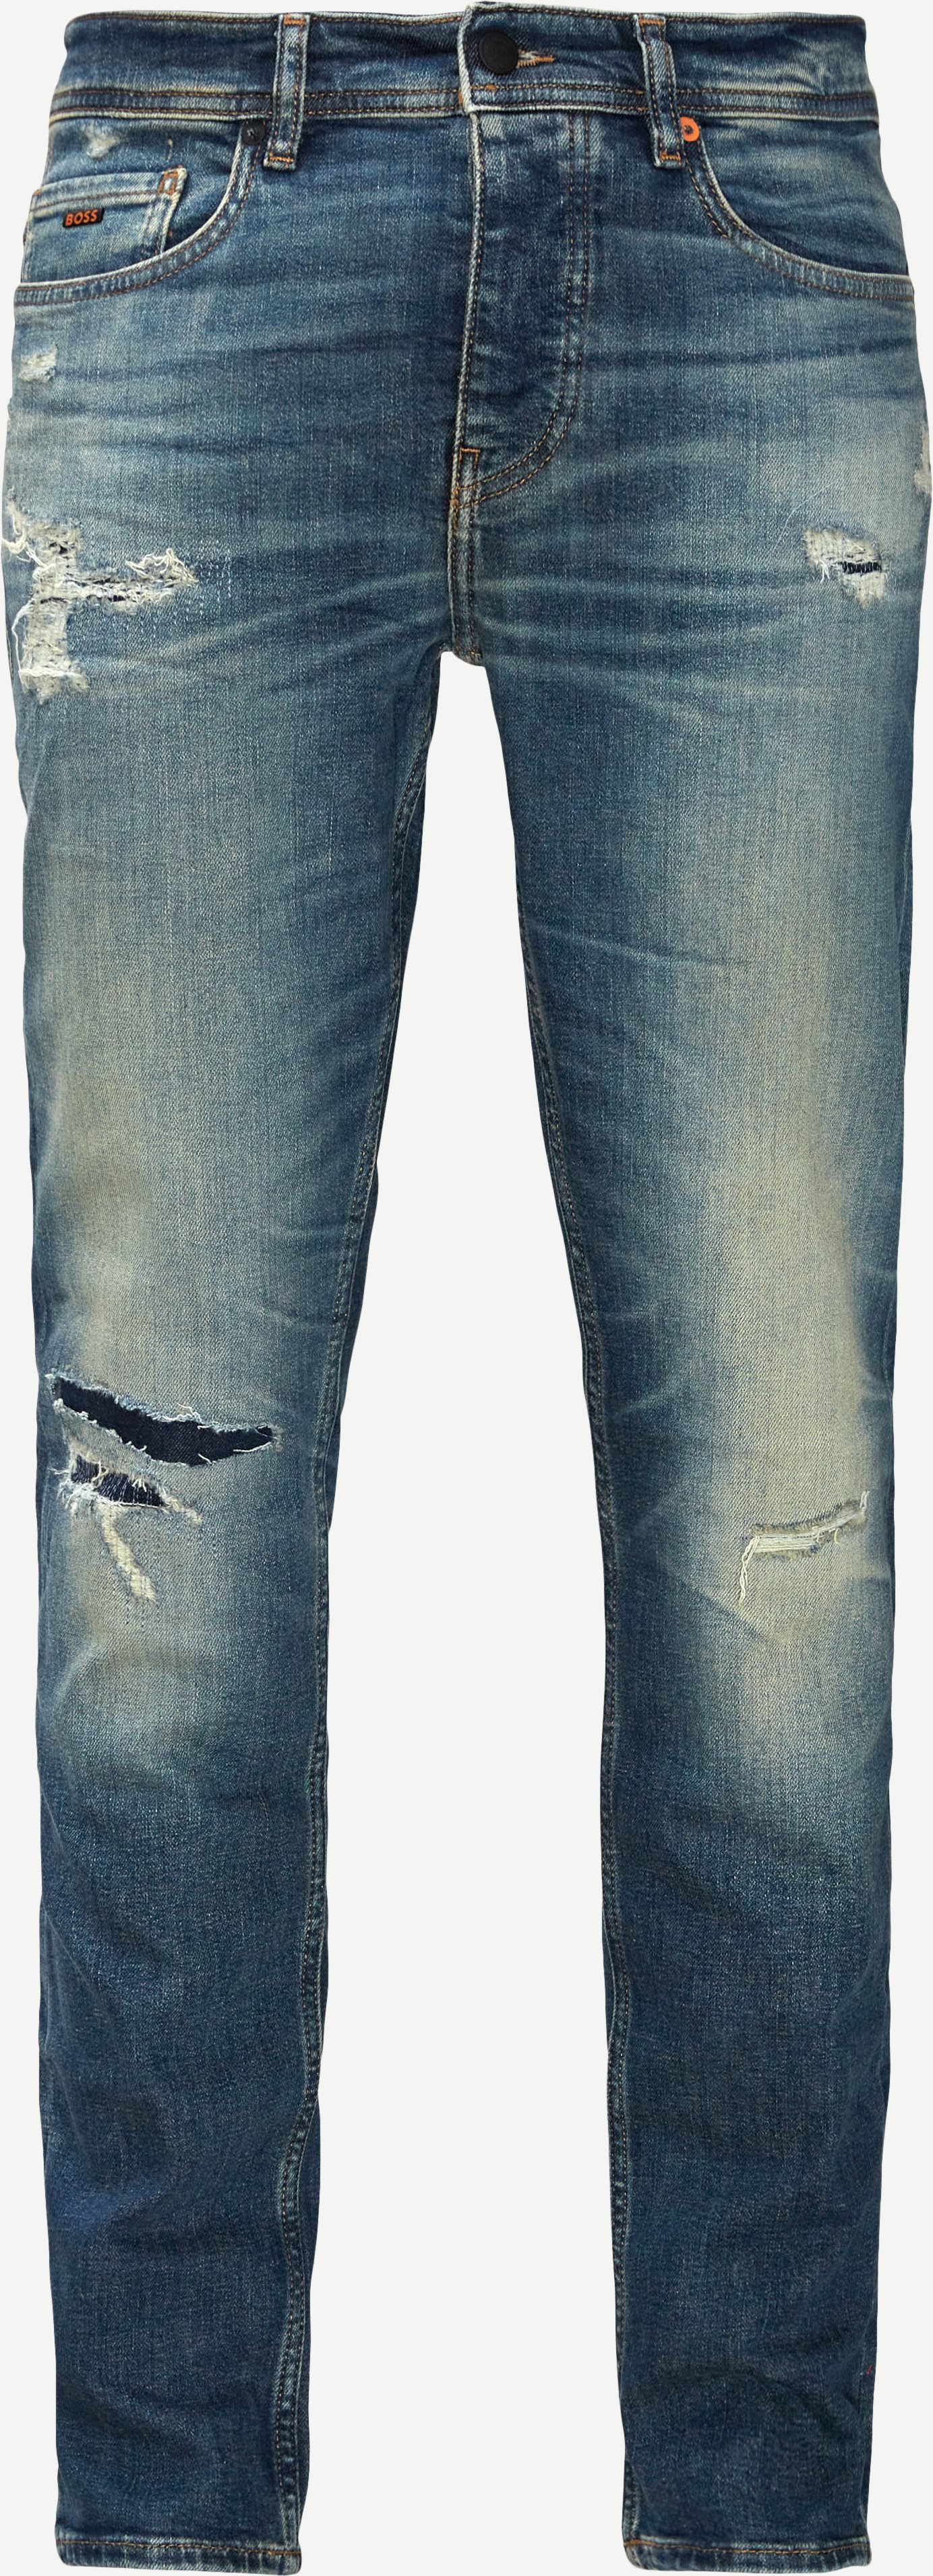 Jeans - Tapered fit - Denim